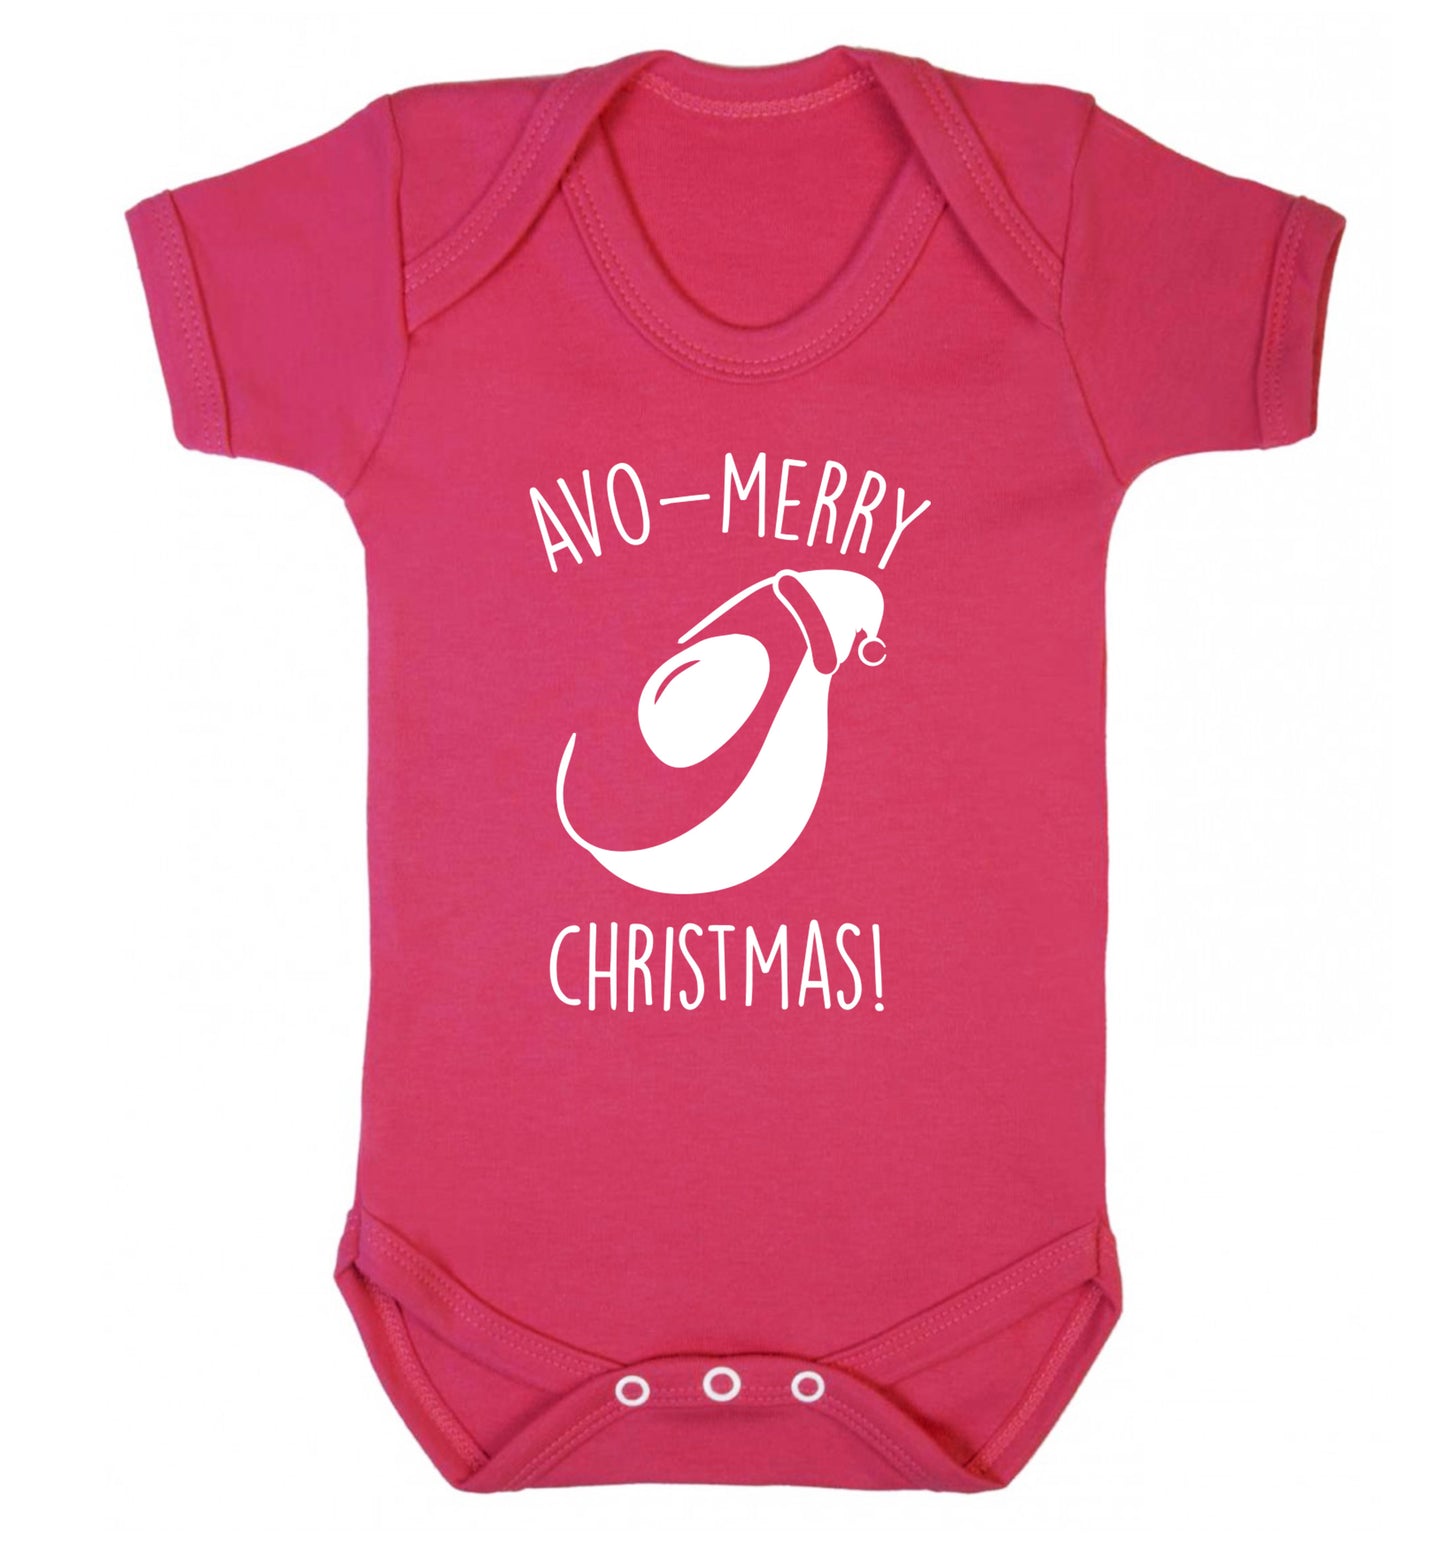 Avo-Merry Christmas Baby Vest dark pink 18-24 months